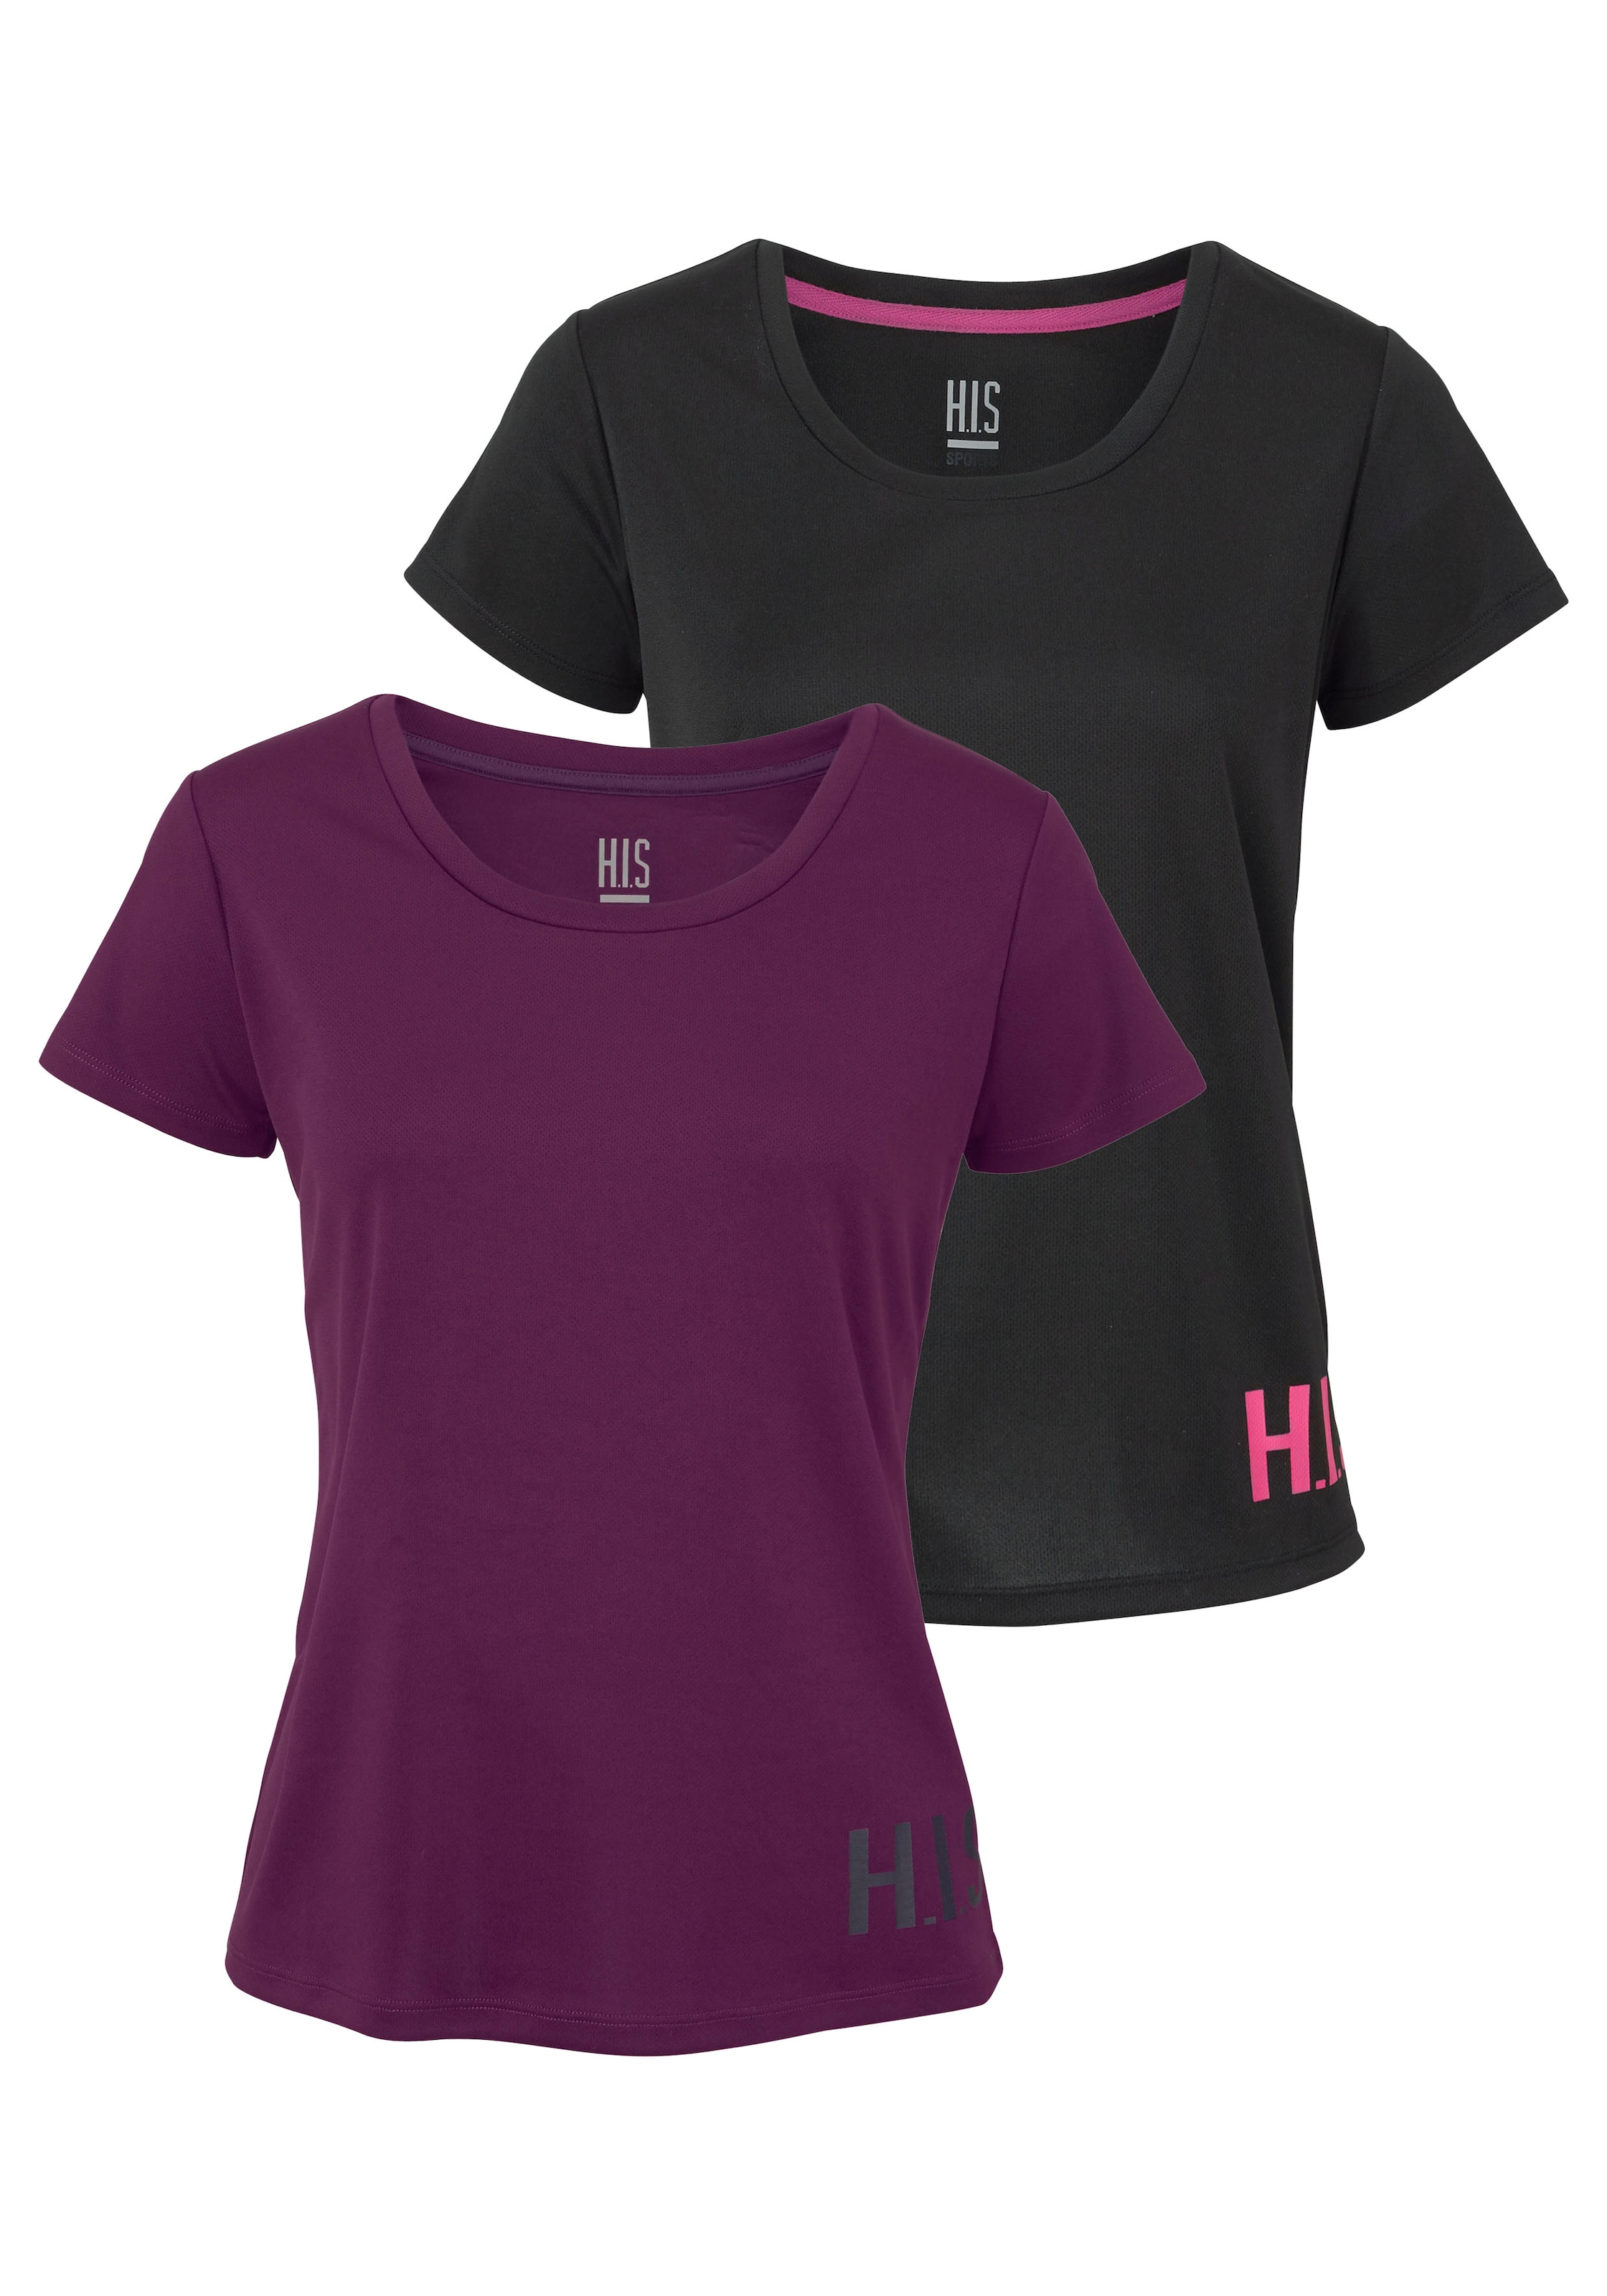 Frauen Shirts & Tops H.I.S Shirt in Lila, Schwarz - JO31992